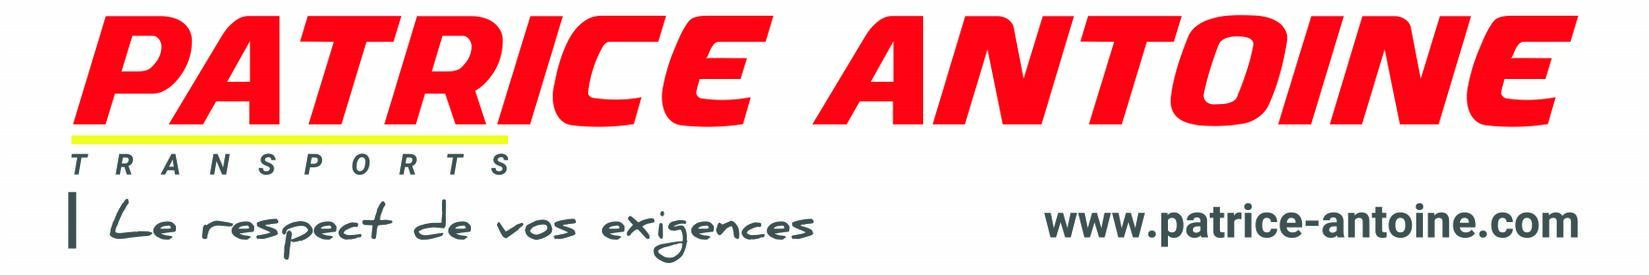 Logo Patrice-Antoine, transporteur